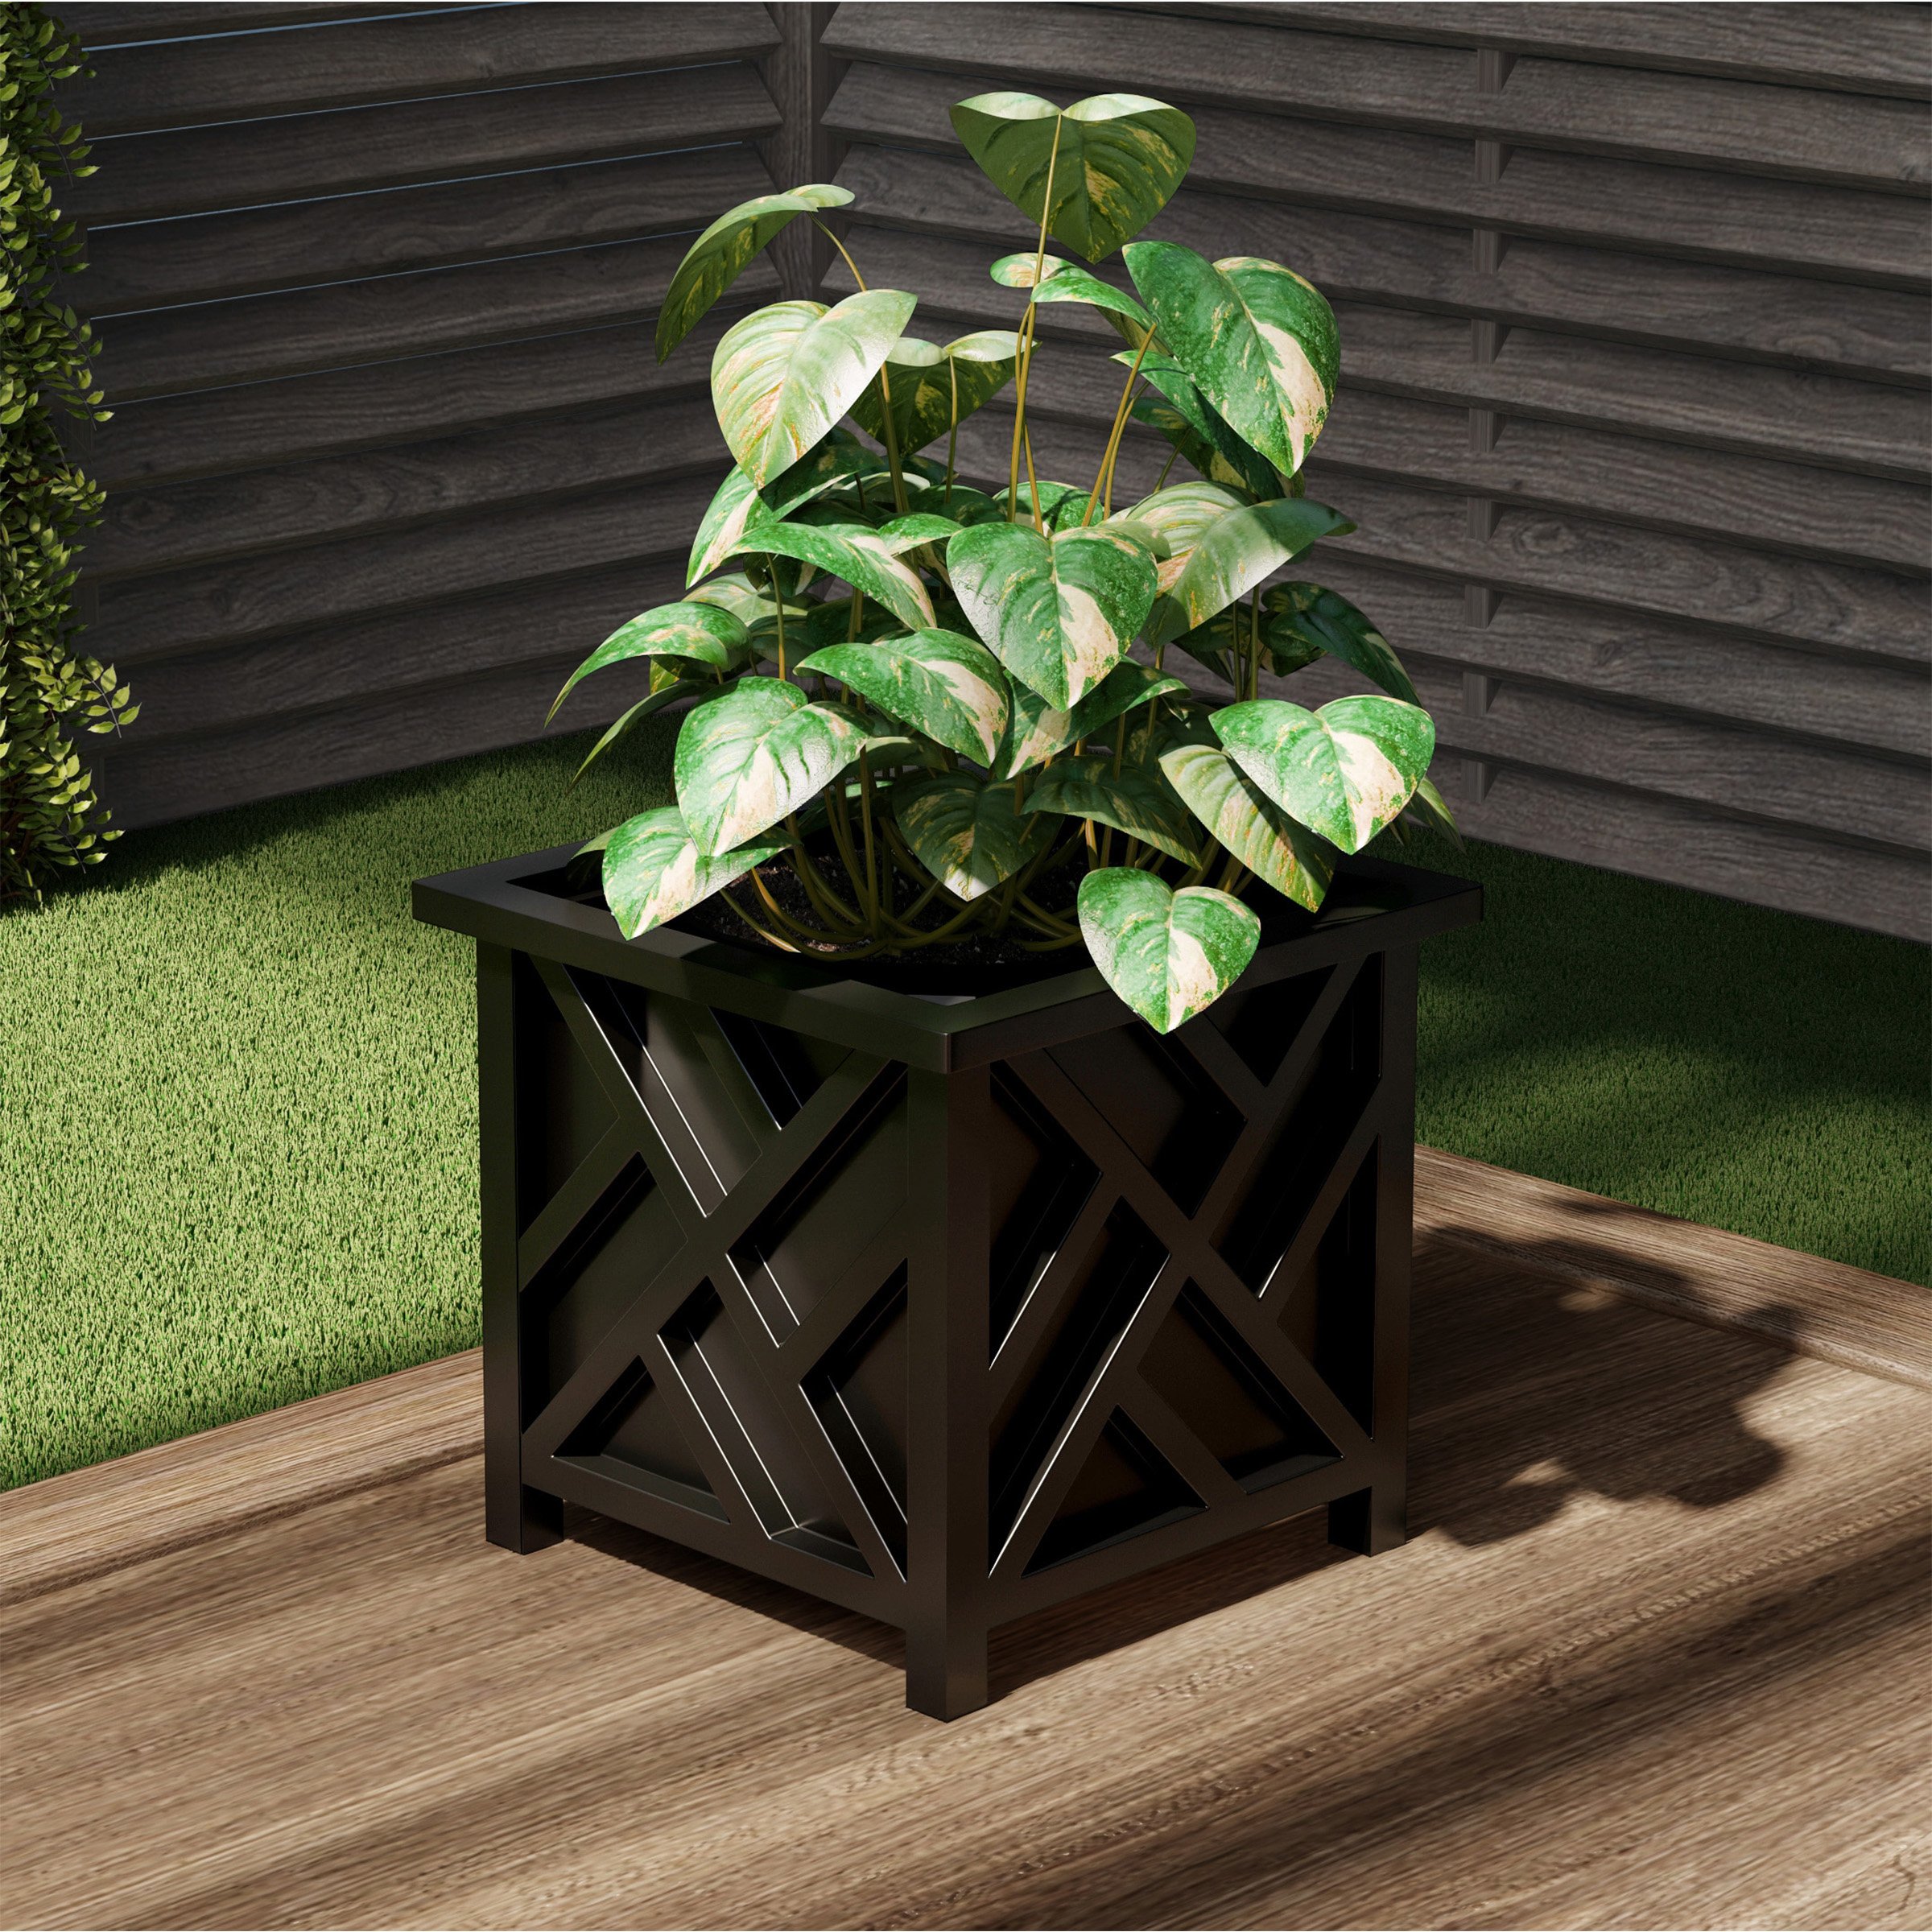 Square Planter Box- Black Lattice Container For Flowers & Plants Bottom Insert Holds Soil Outdoor Pot For Garden Patio - Black